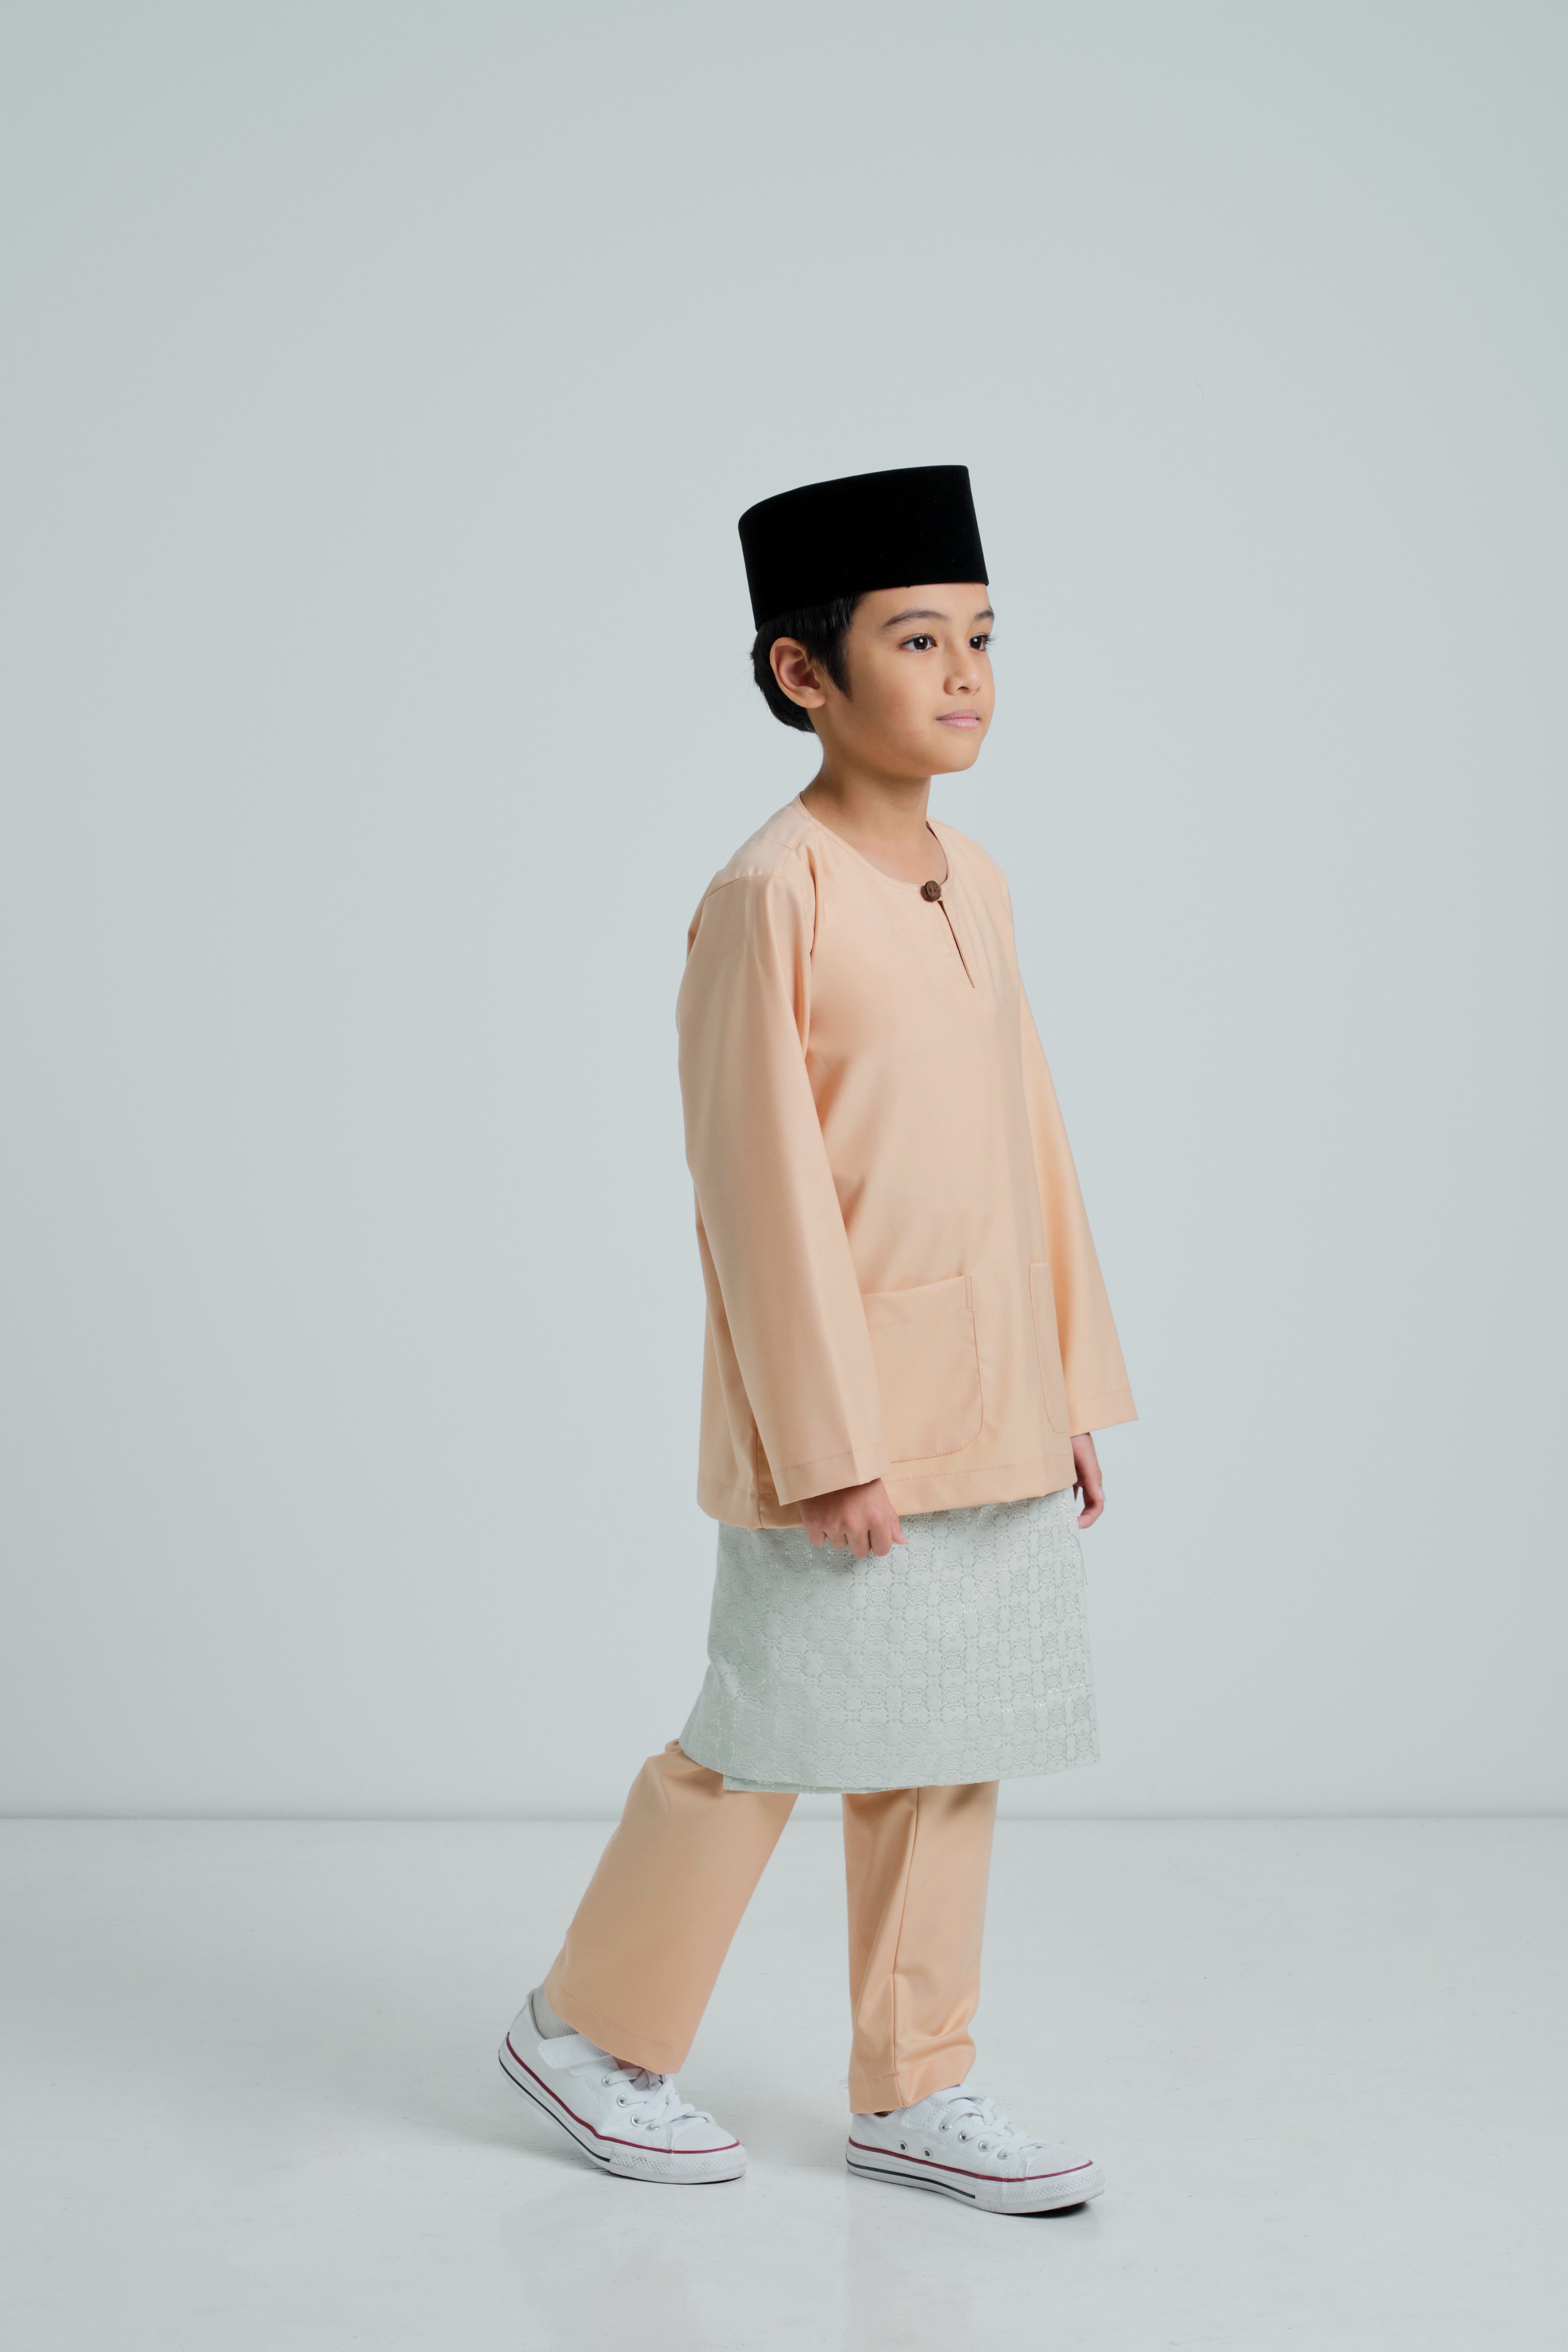 Patawali Boys Baju Melayu Teluk Belanga - Sandy Brown